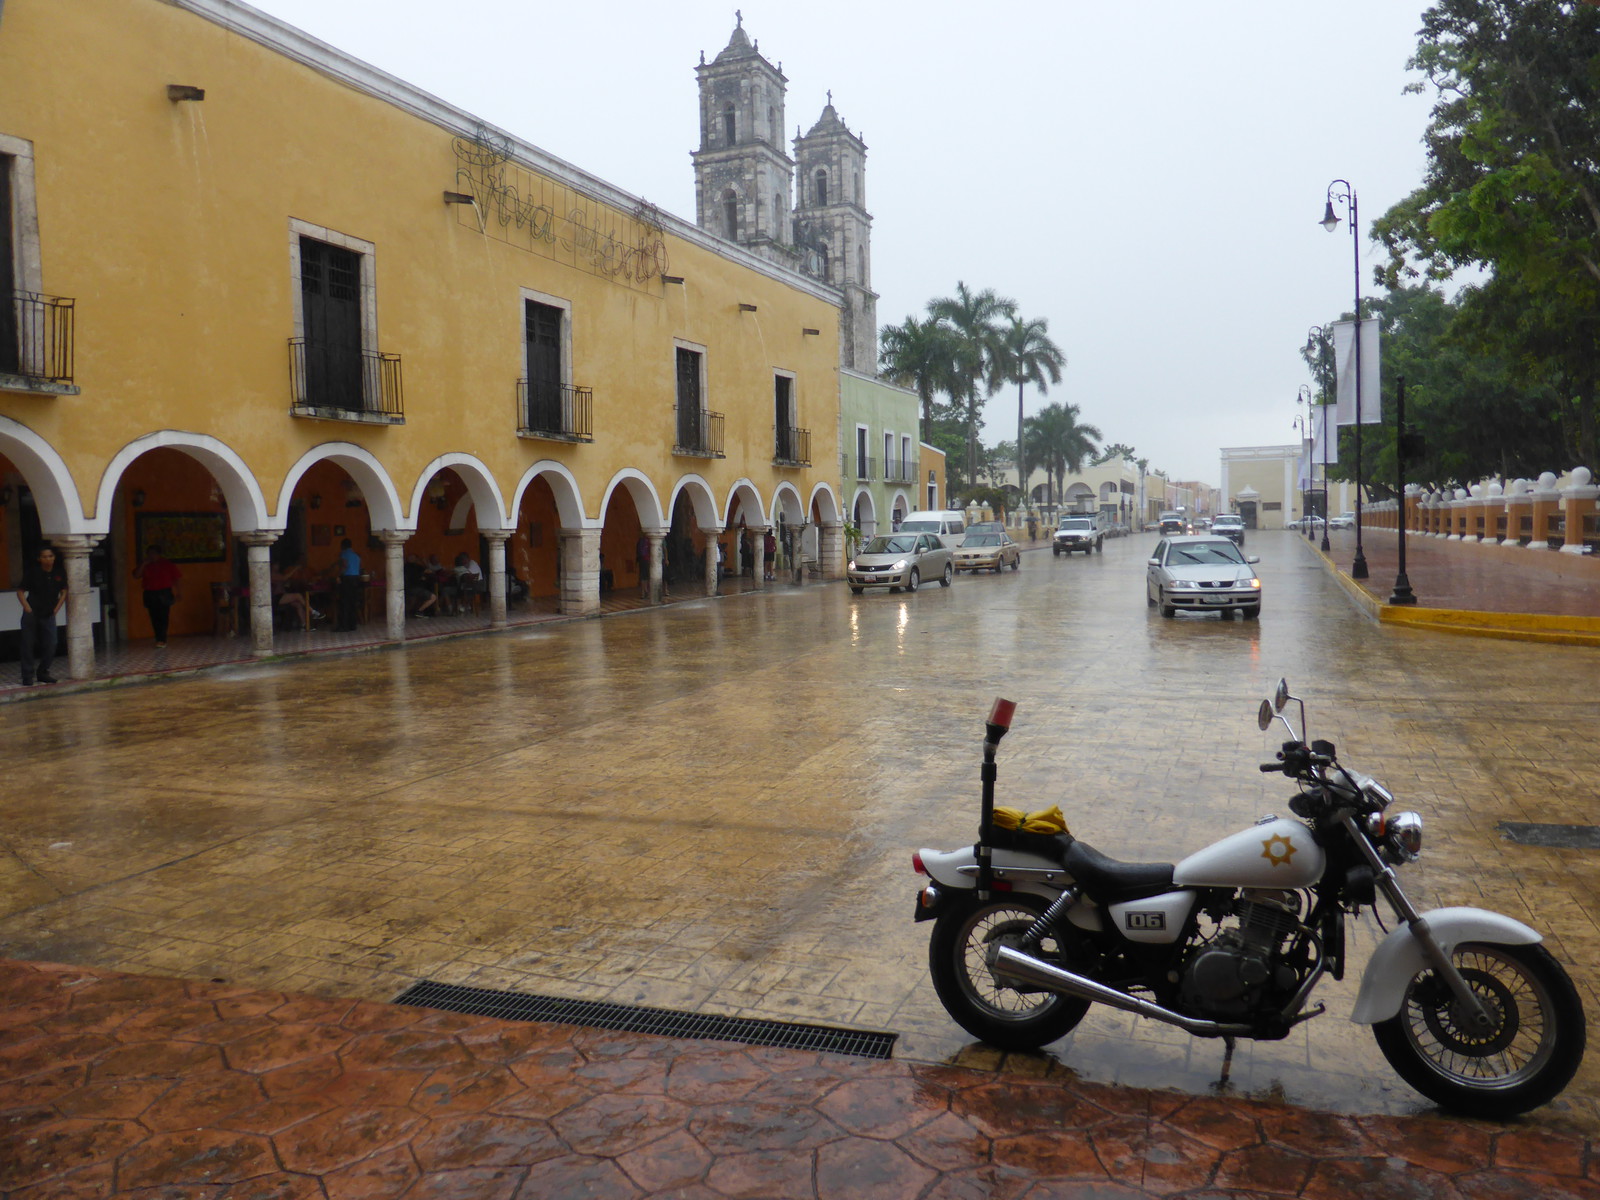 The main plaza in the rain